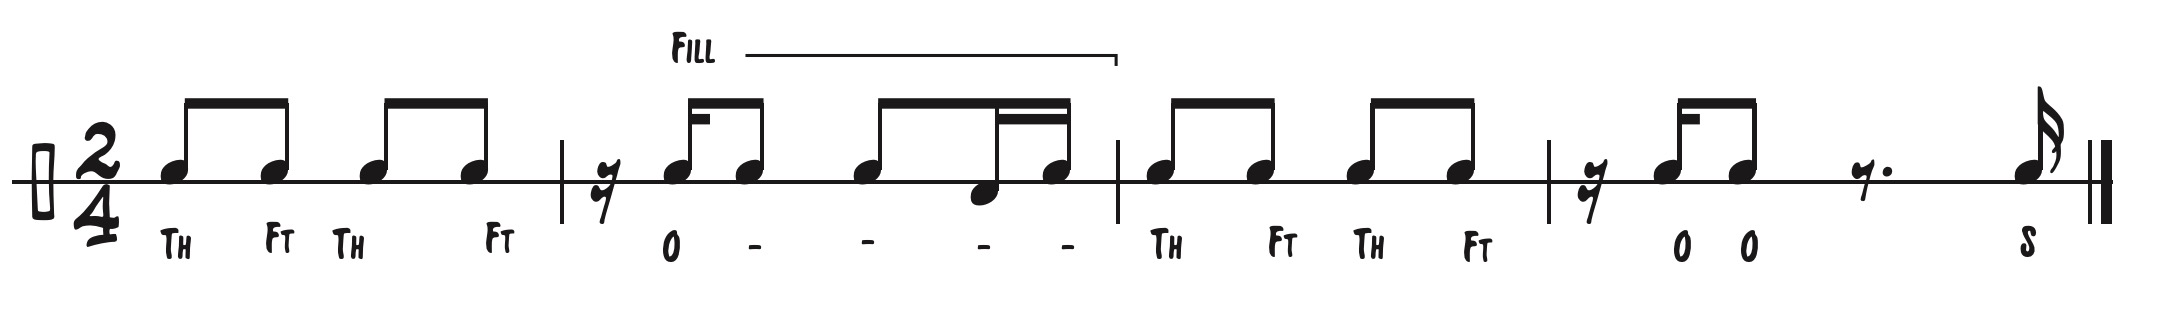 Changui bongo pattern notation example